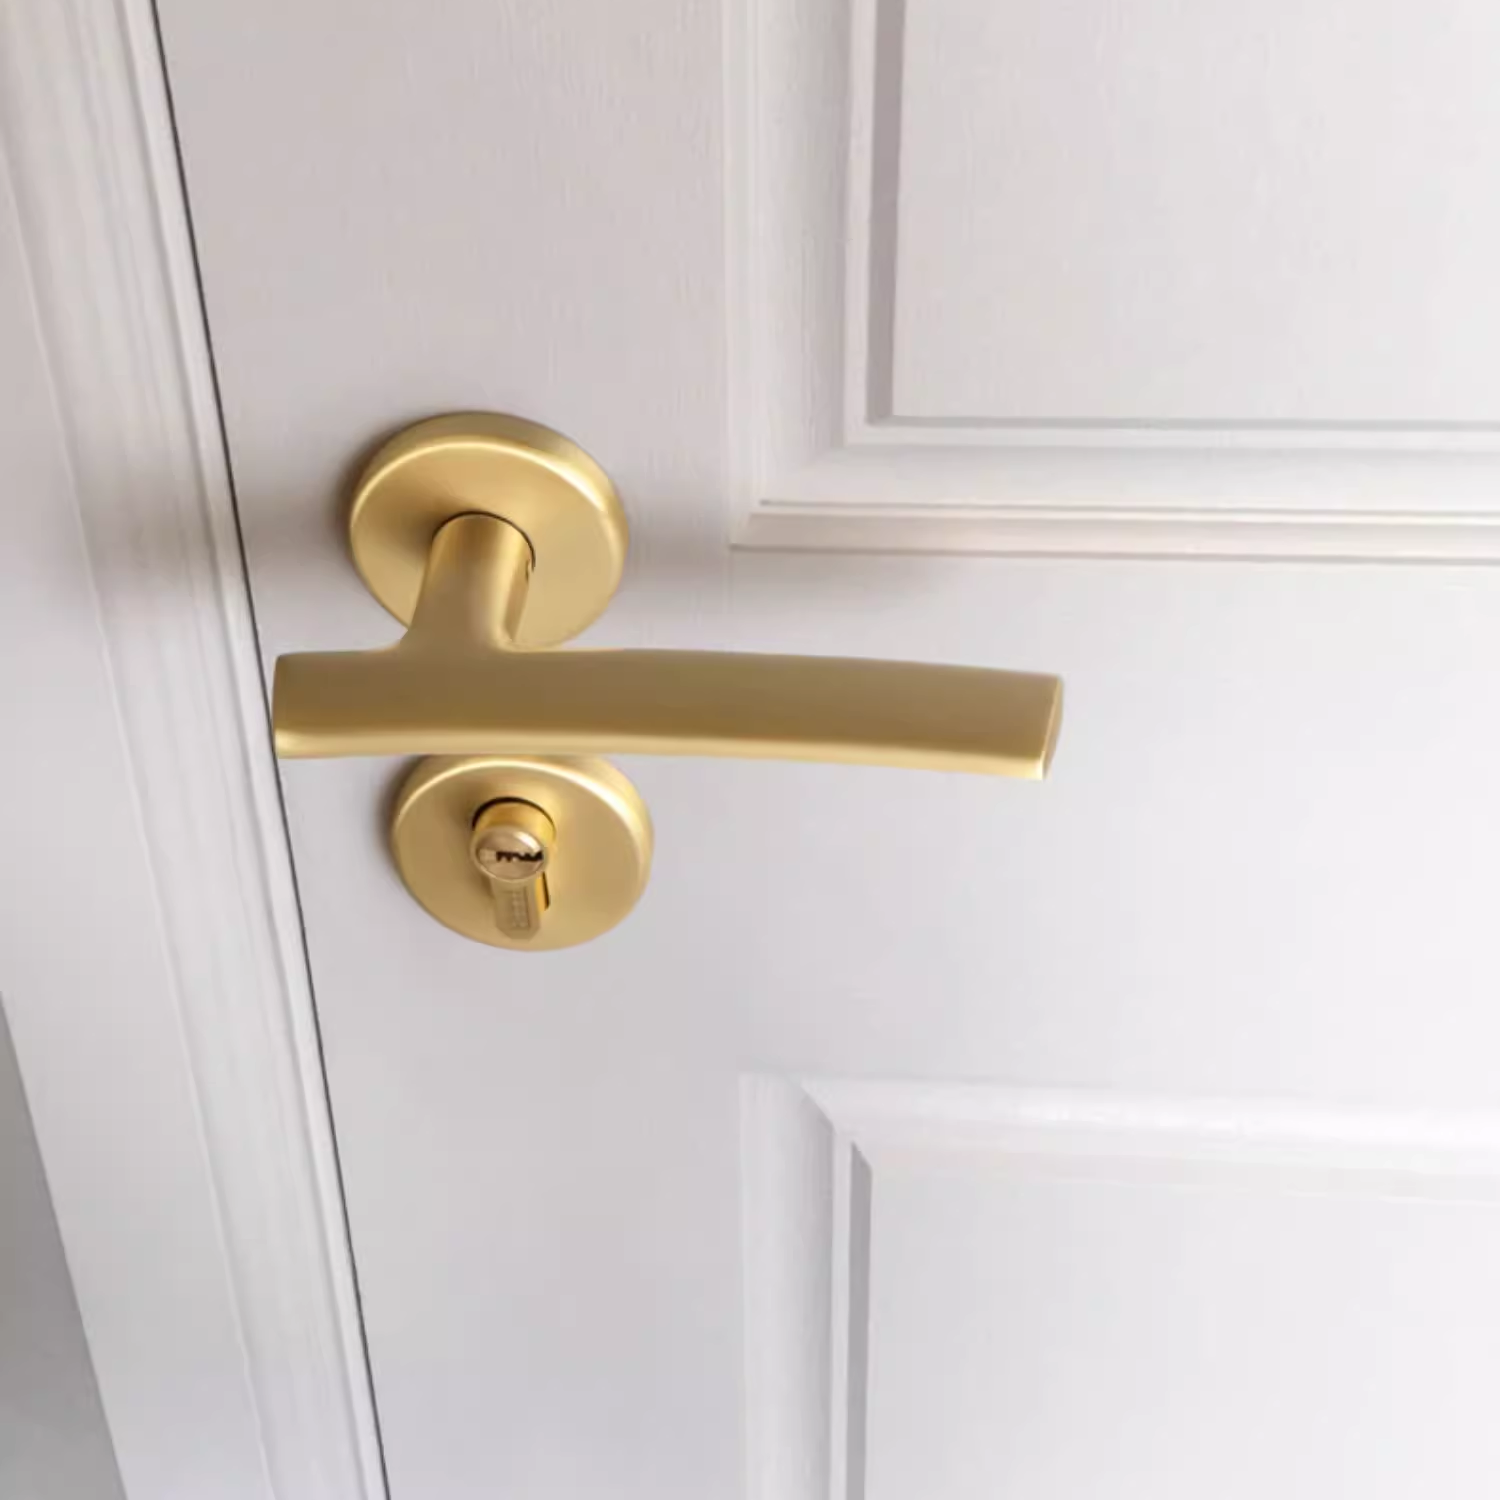 Goo-Ki Branches Pure Copper Interior Door Lock Bedroom Silent Lock for Home